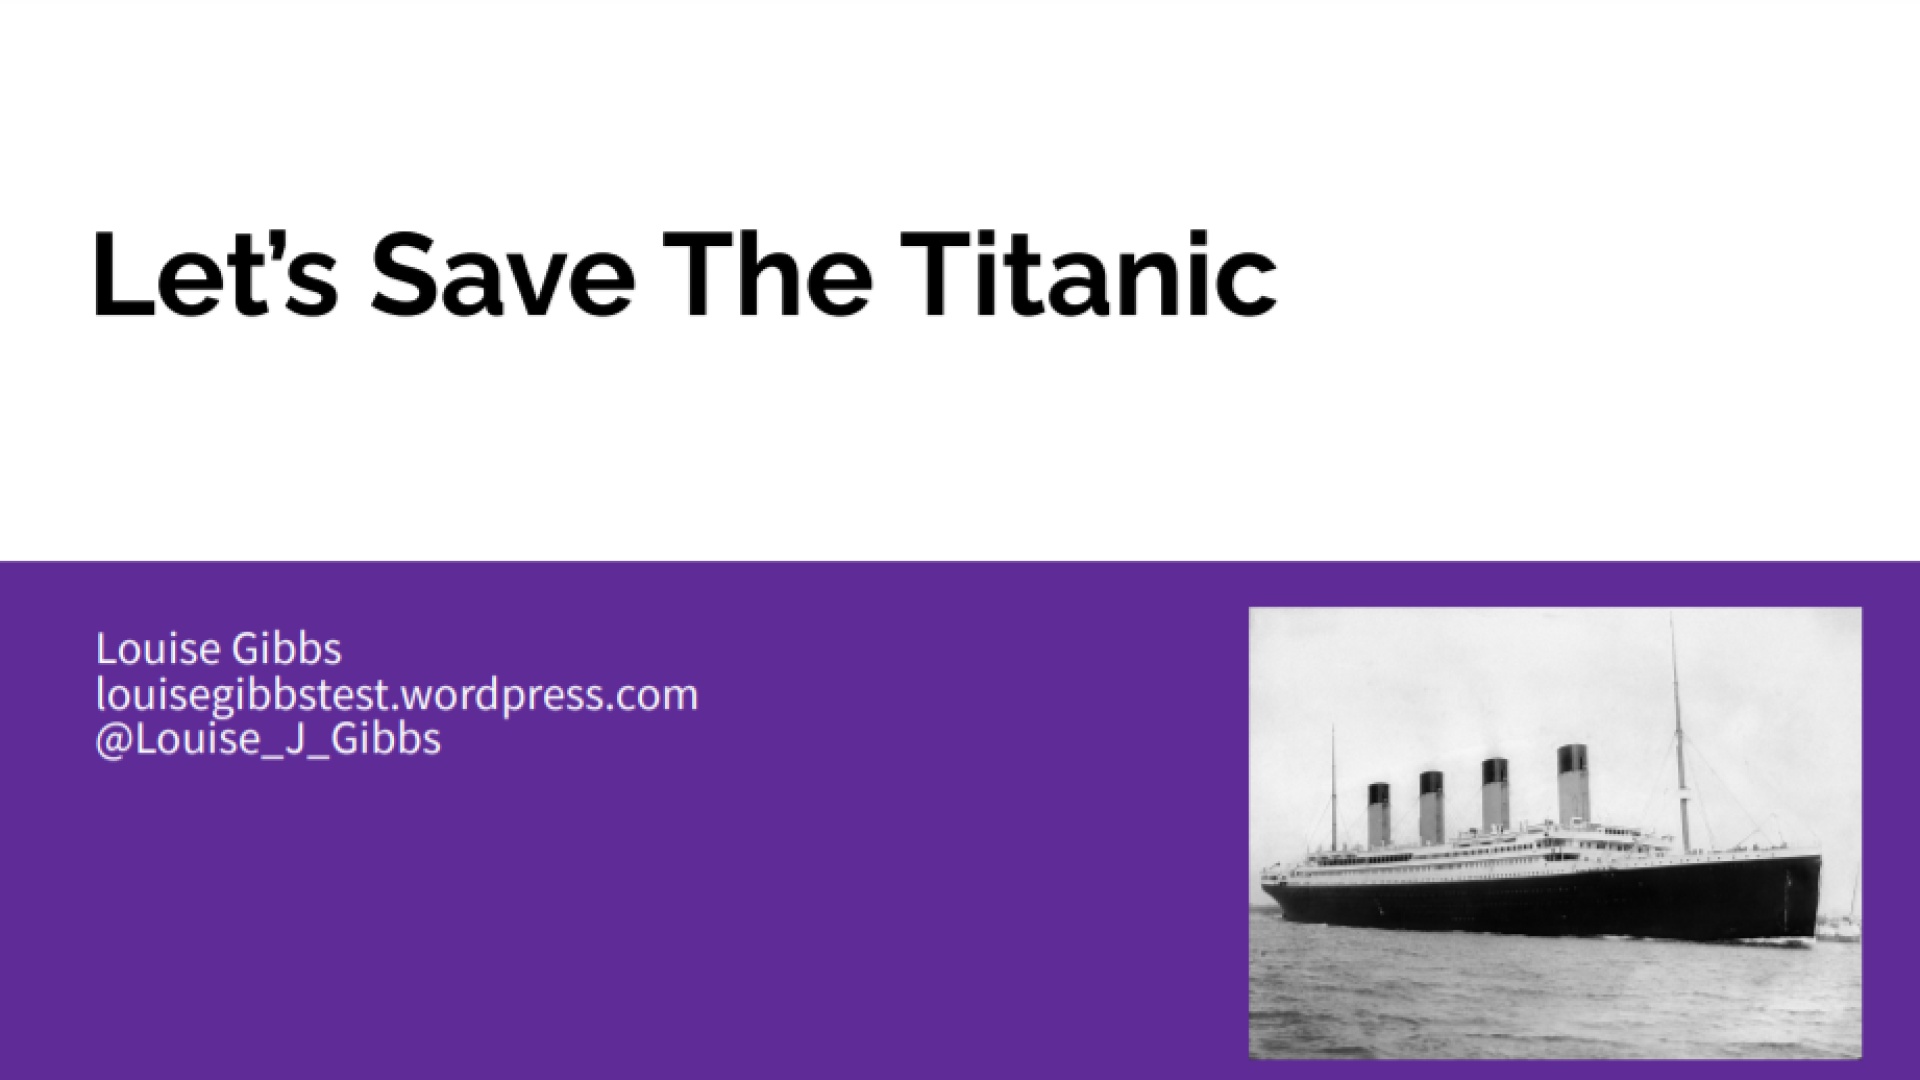 Let's Save The Titanic - Louise Gibbs